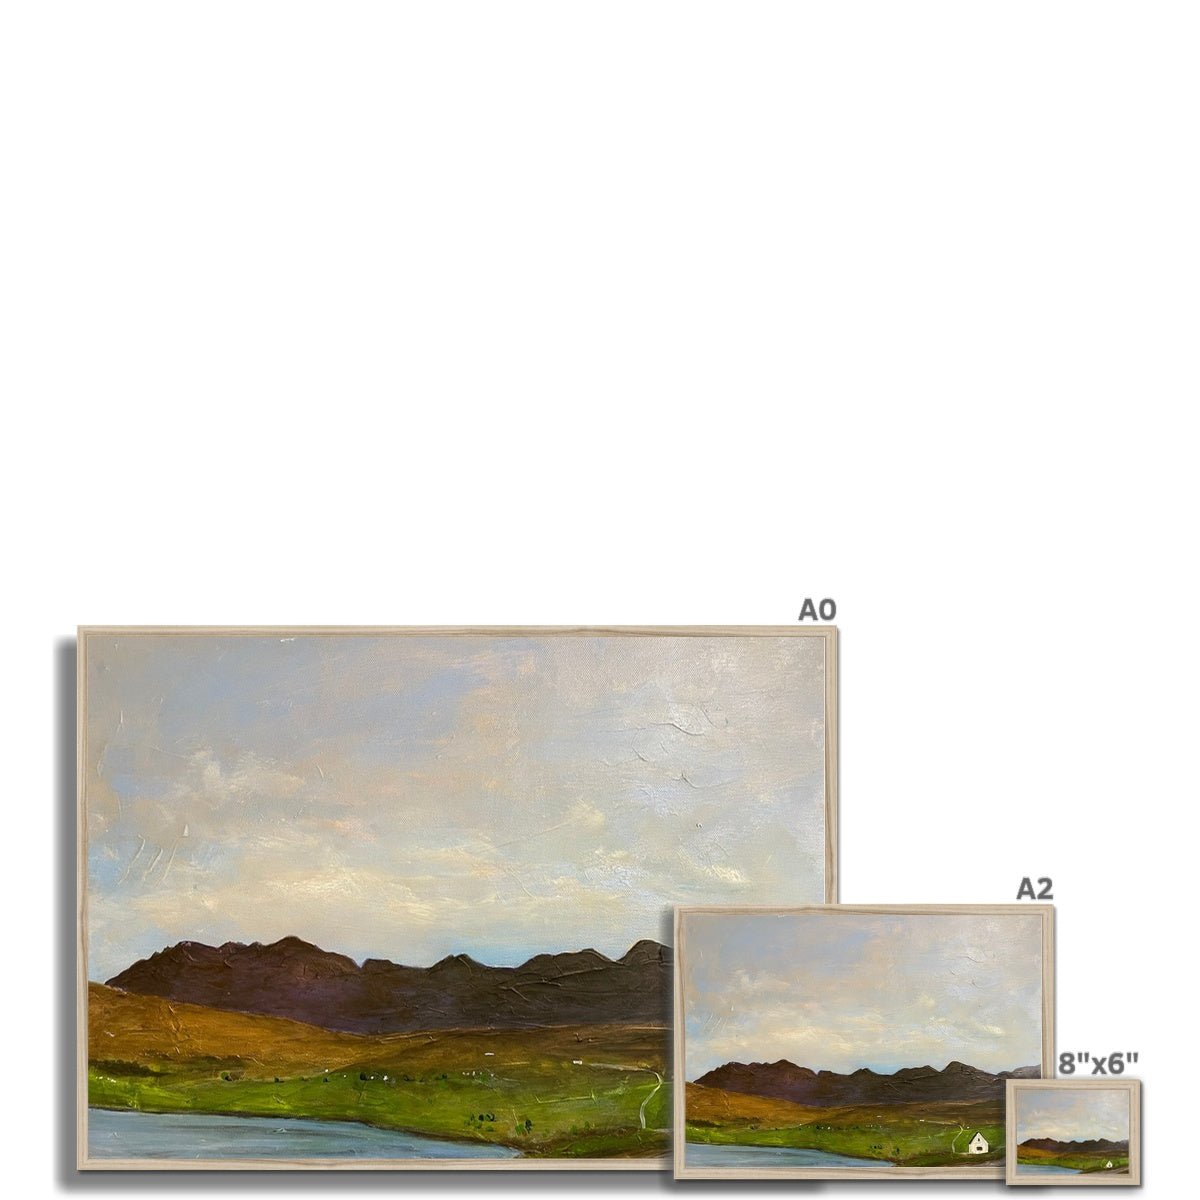 The Road To Carbost Skye Painting | Framed Prints From Scotland-Framed Prints-Skye Art Gallery-Paintings, Prints, Homeware, Art Gifts From Scotland By Scottish Artist Kevin Hunter